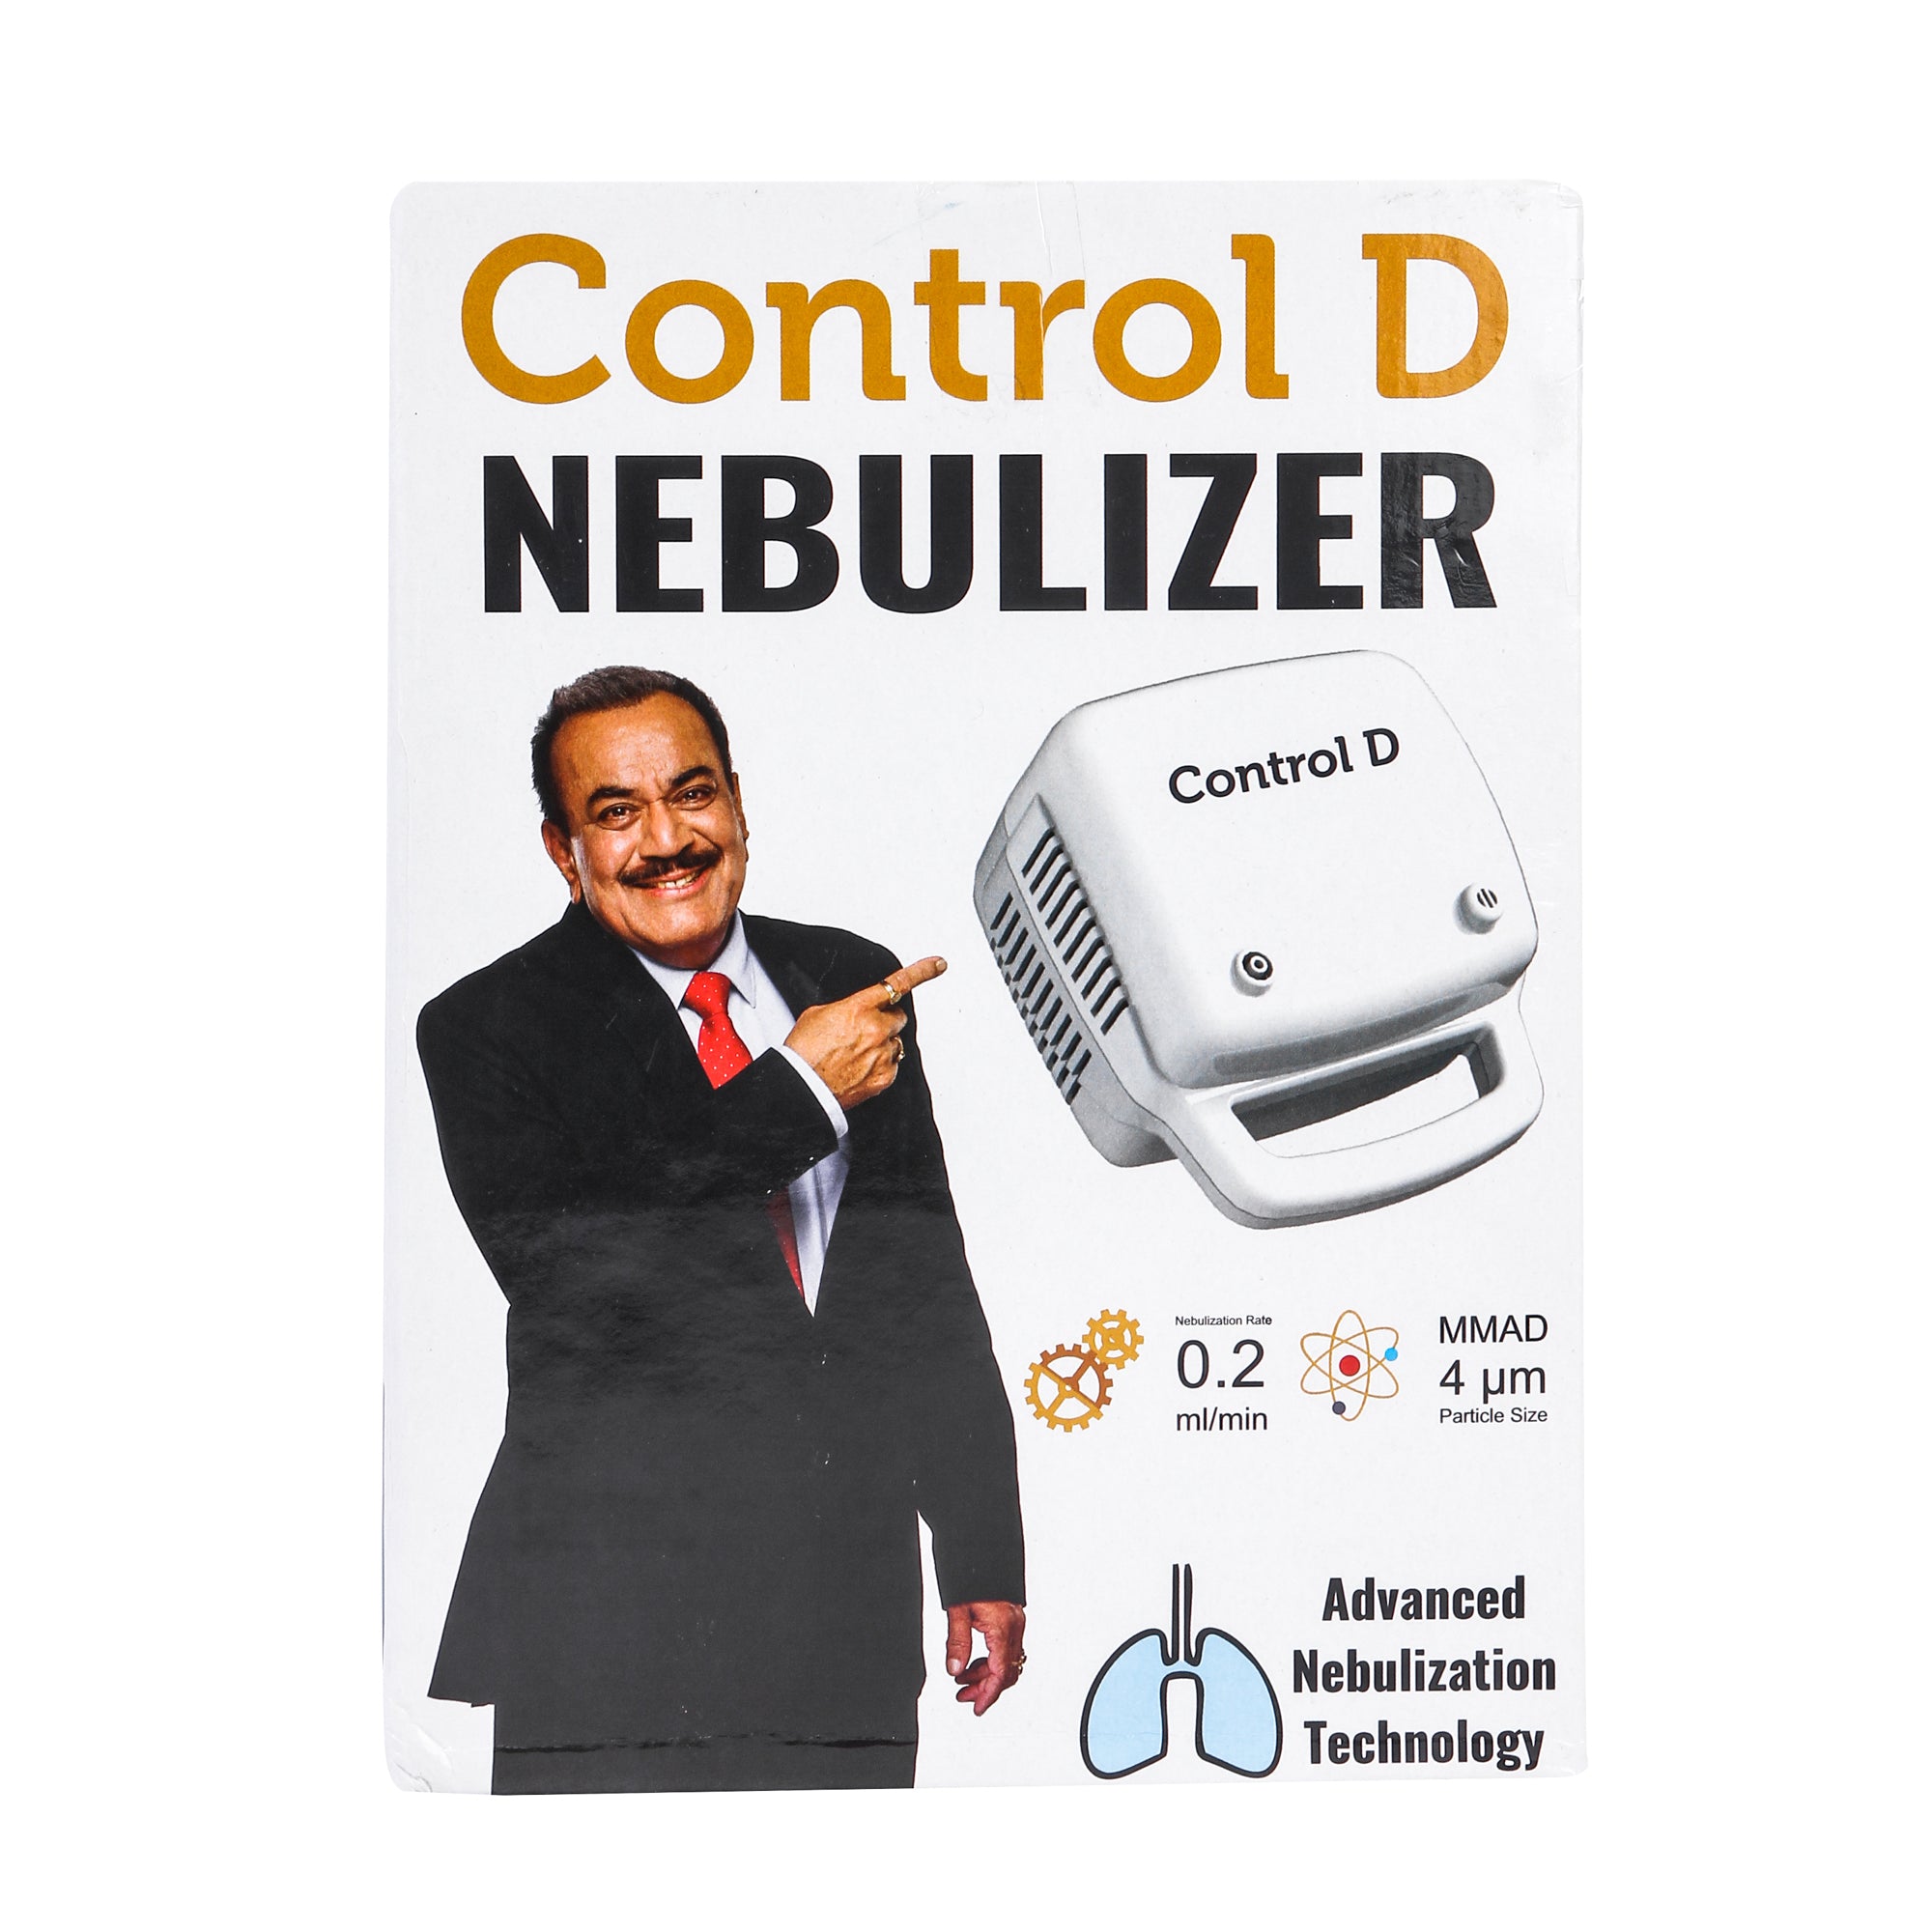 Control D Nebulizer